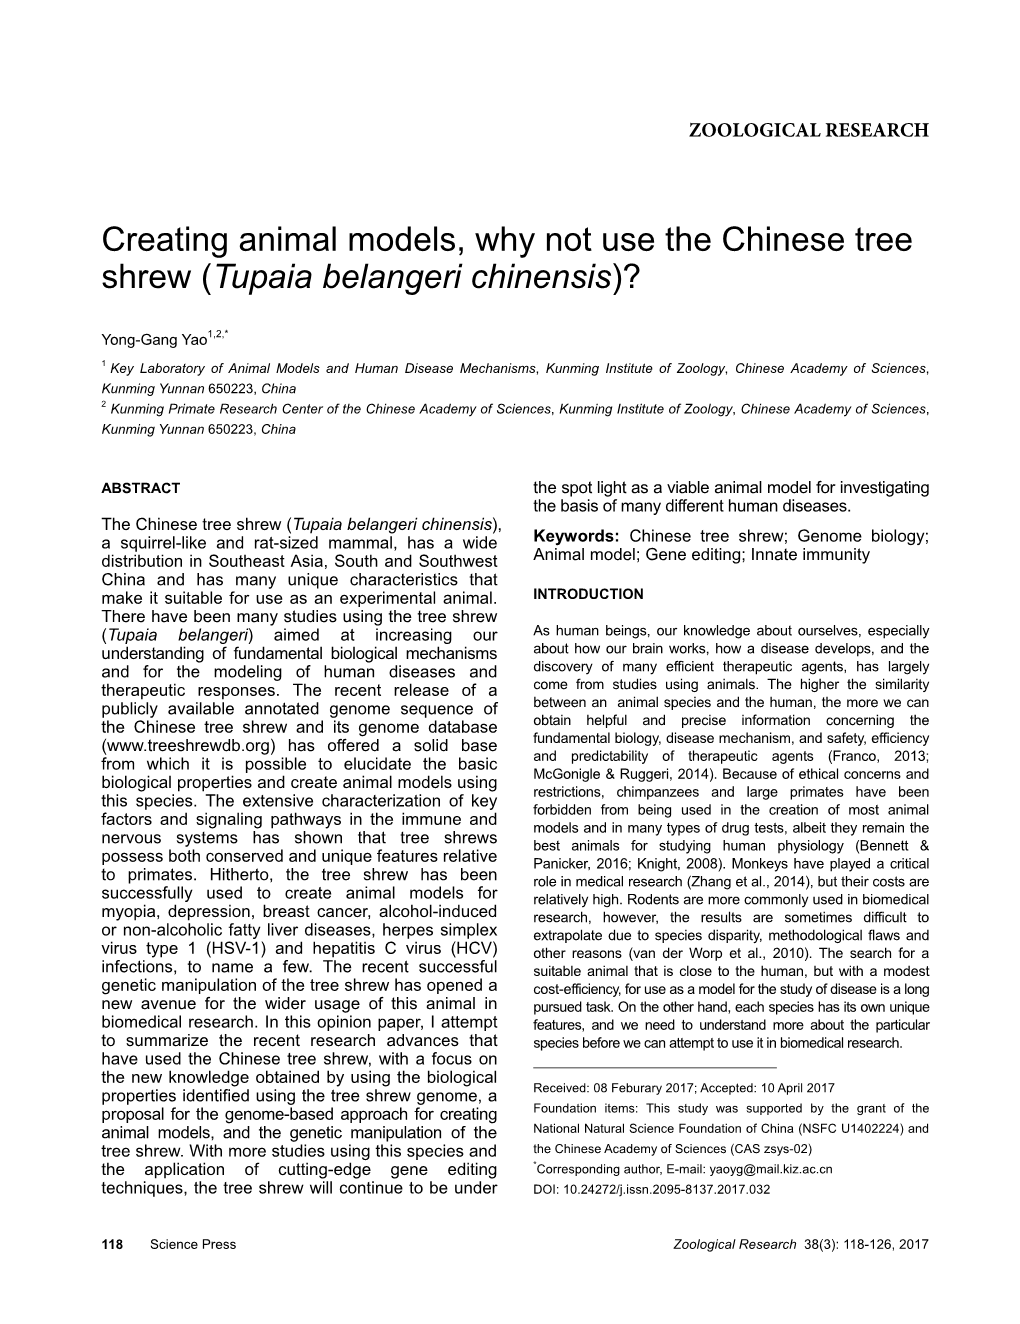 Creating Animal Models, Why Not Use the Chinese Tree Shrew (Tupaia Belangeri Chinensis)?